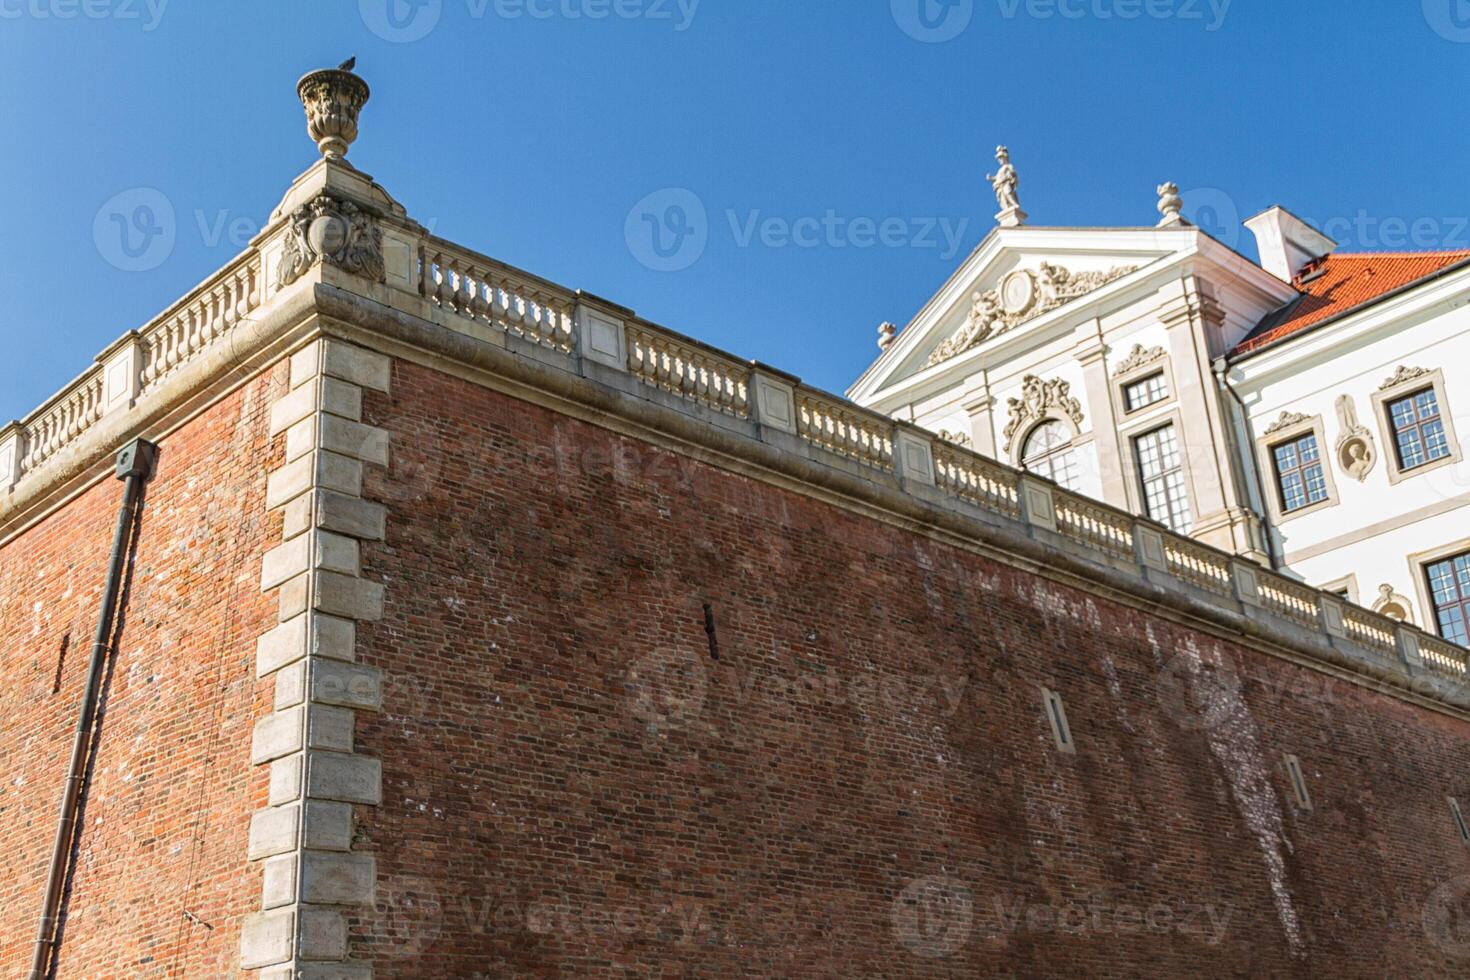 museu de frederick chopin. palácio barroco em varsóvia.. famoso arquiteto holandês tylman van gameren. foto